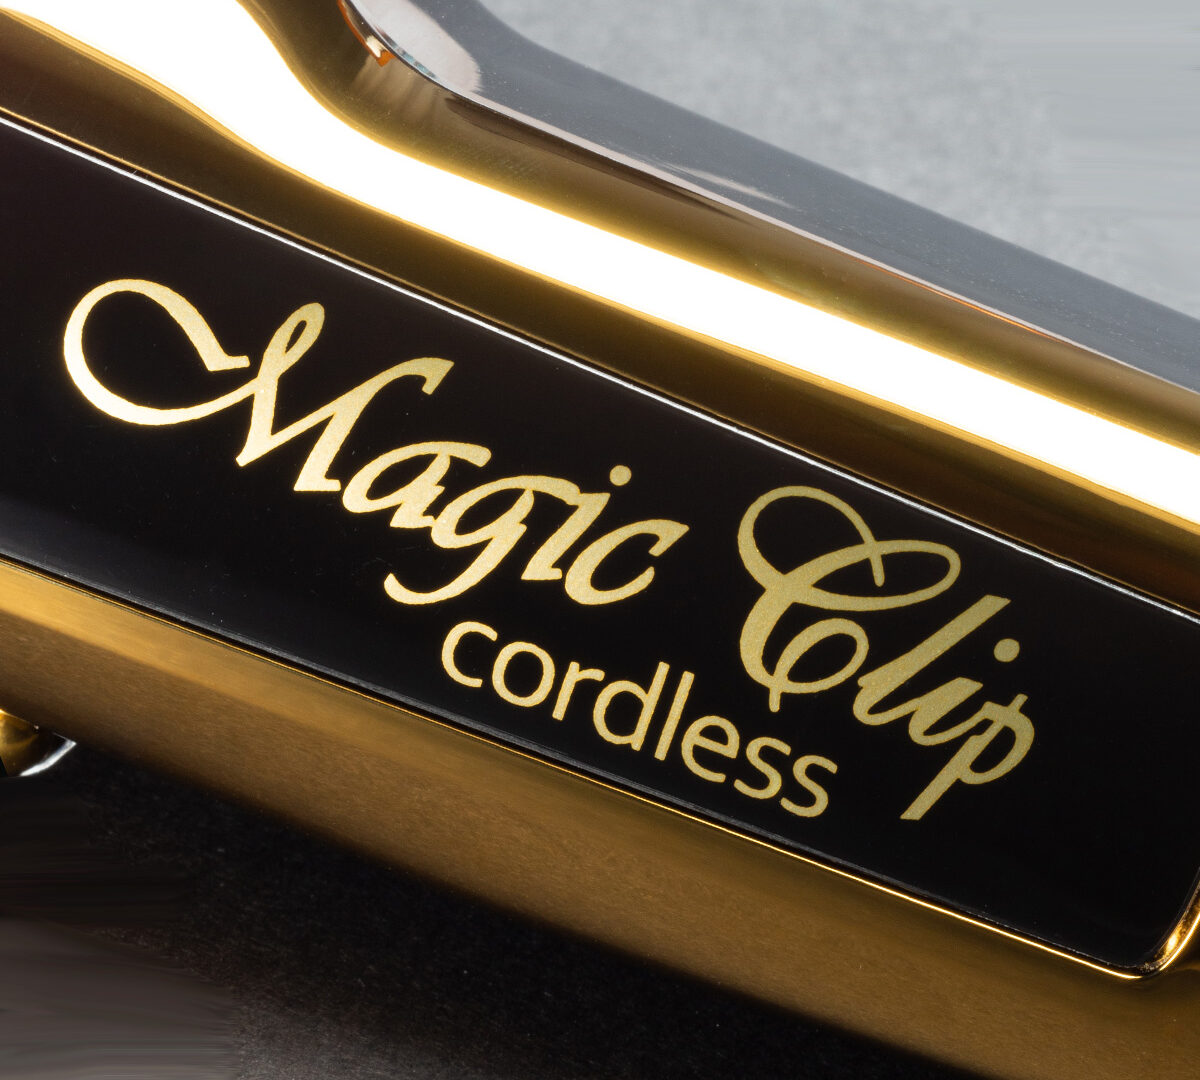 Cordless magic clip trimmer